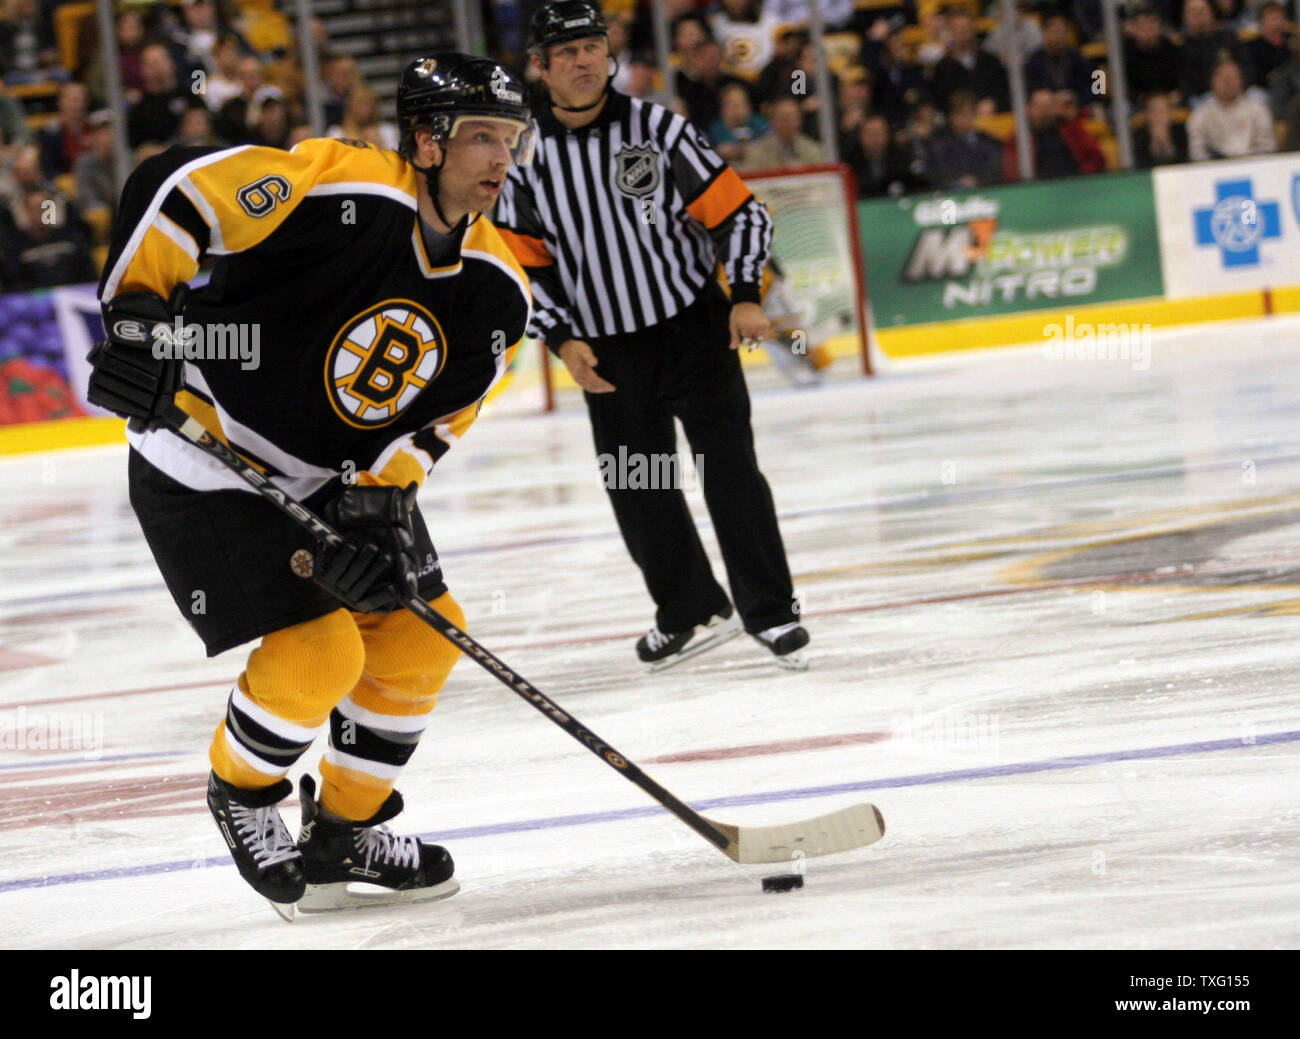 Joe Thornton, Boston Bruins  Boston bruins hockey, Boston hockey